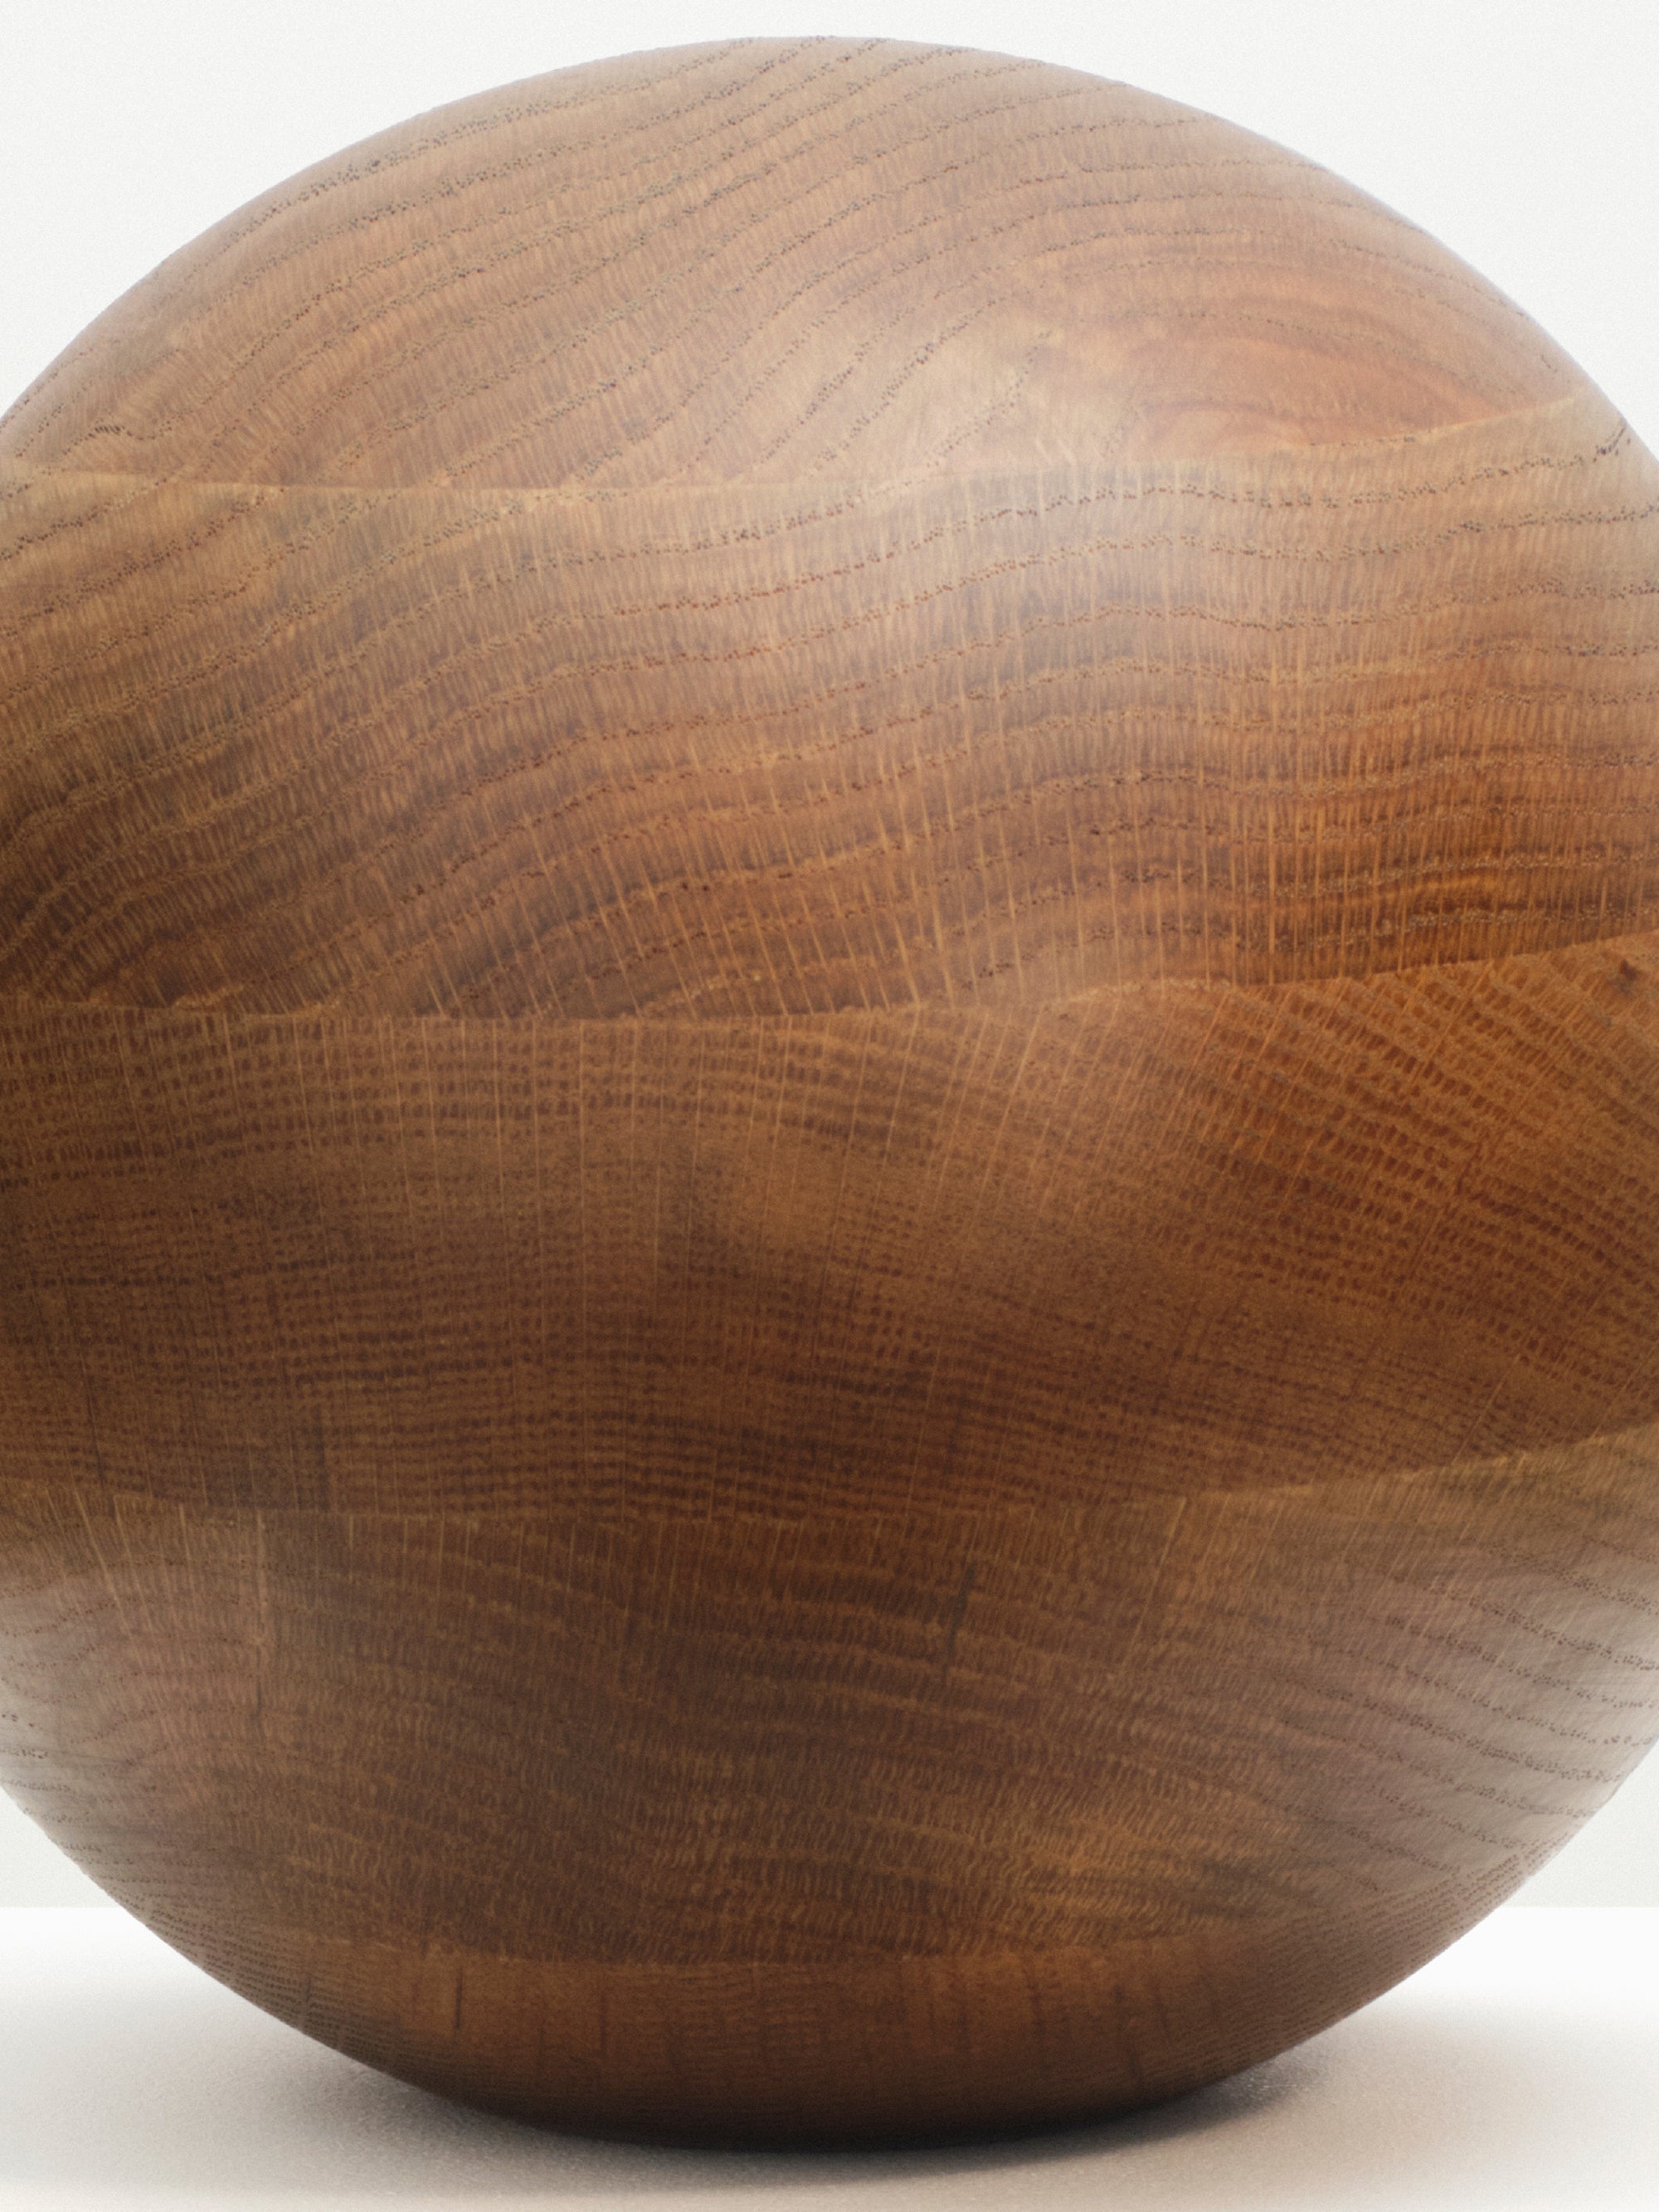 Egg Sculpture - Solid Oak